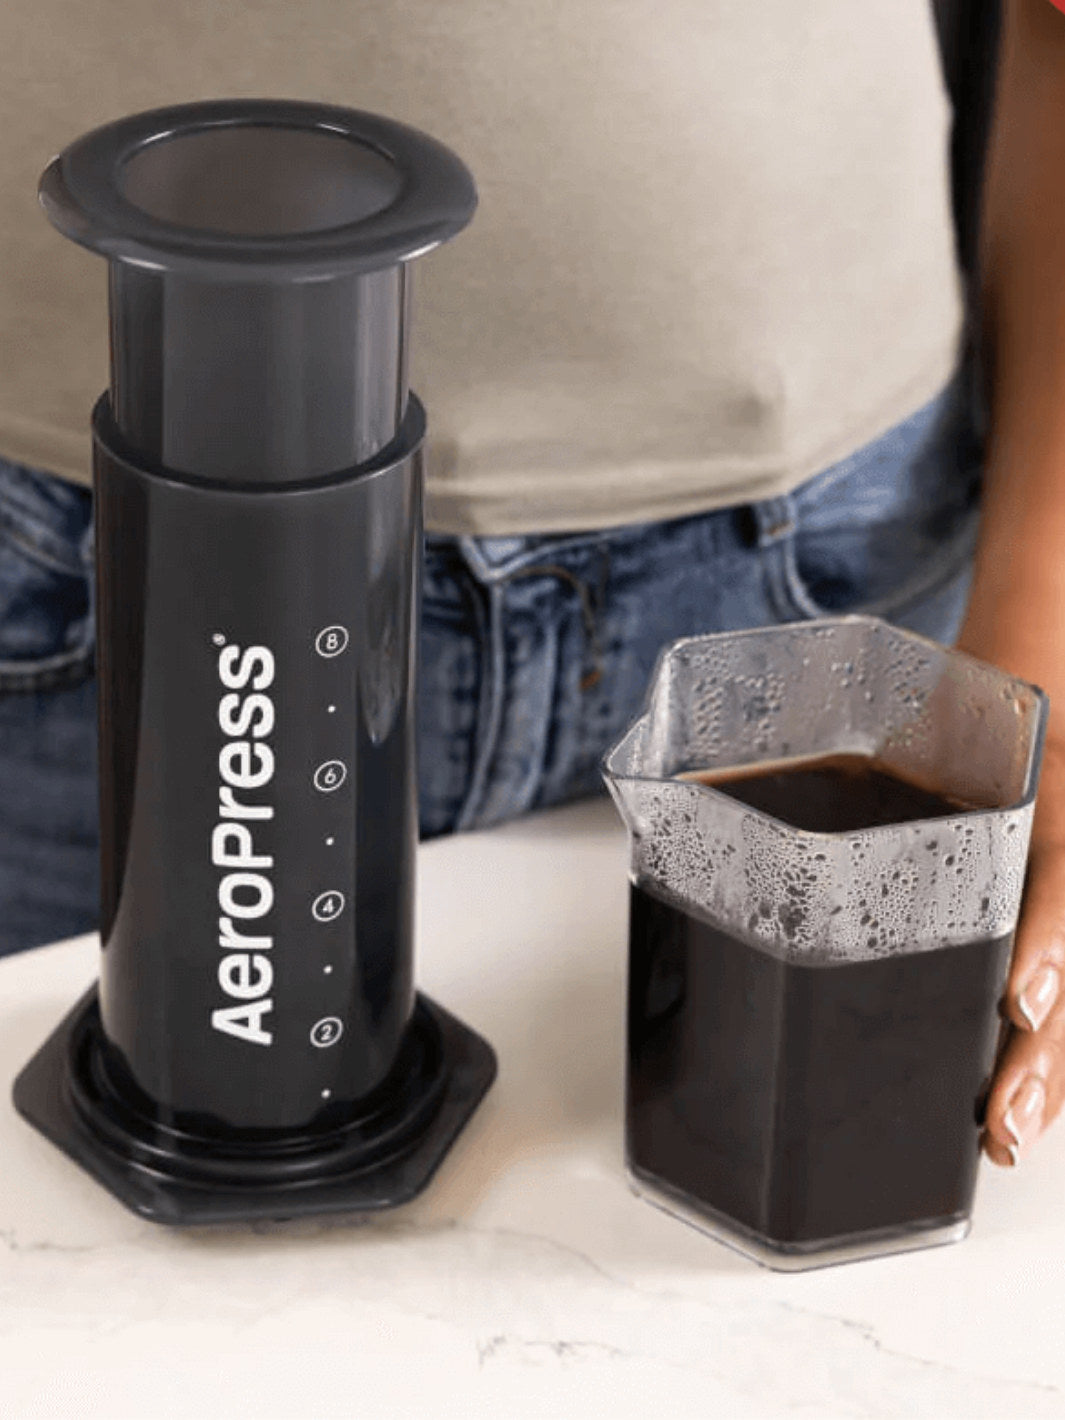 Aerobie AeroPress Coffee Maker